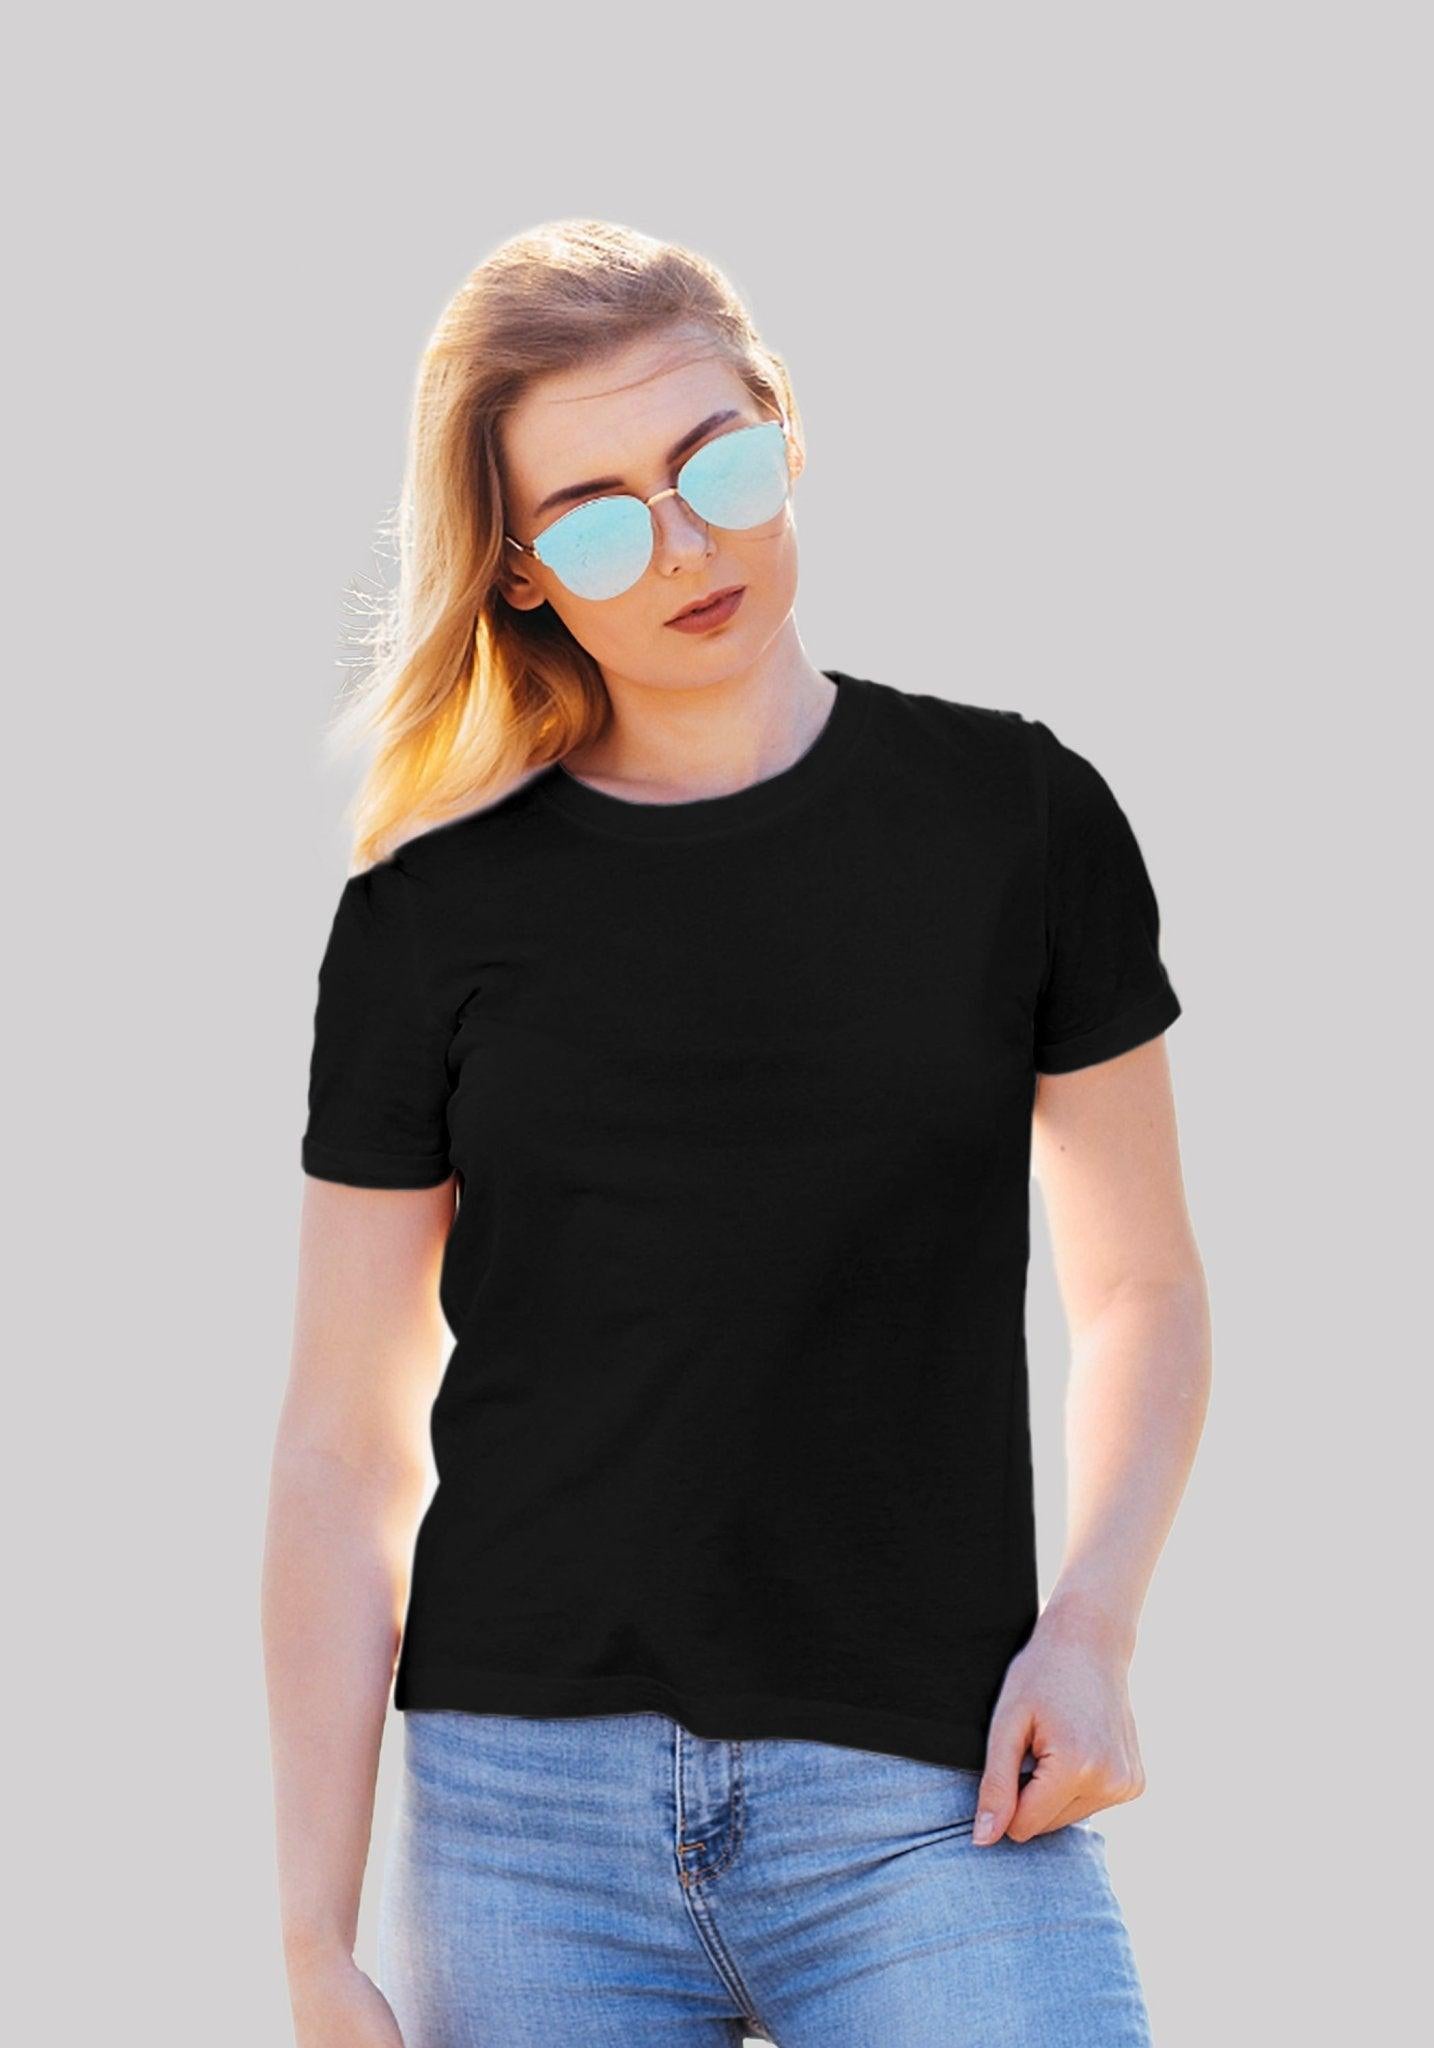 Solid Plain T Shirt Combo For Women In Black Colour Variant